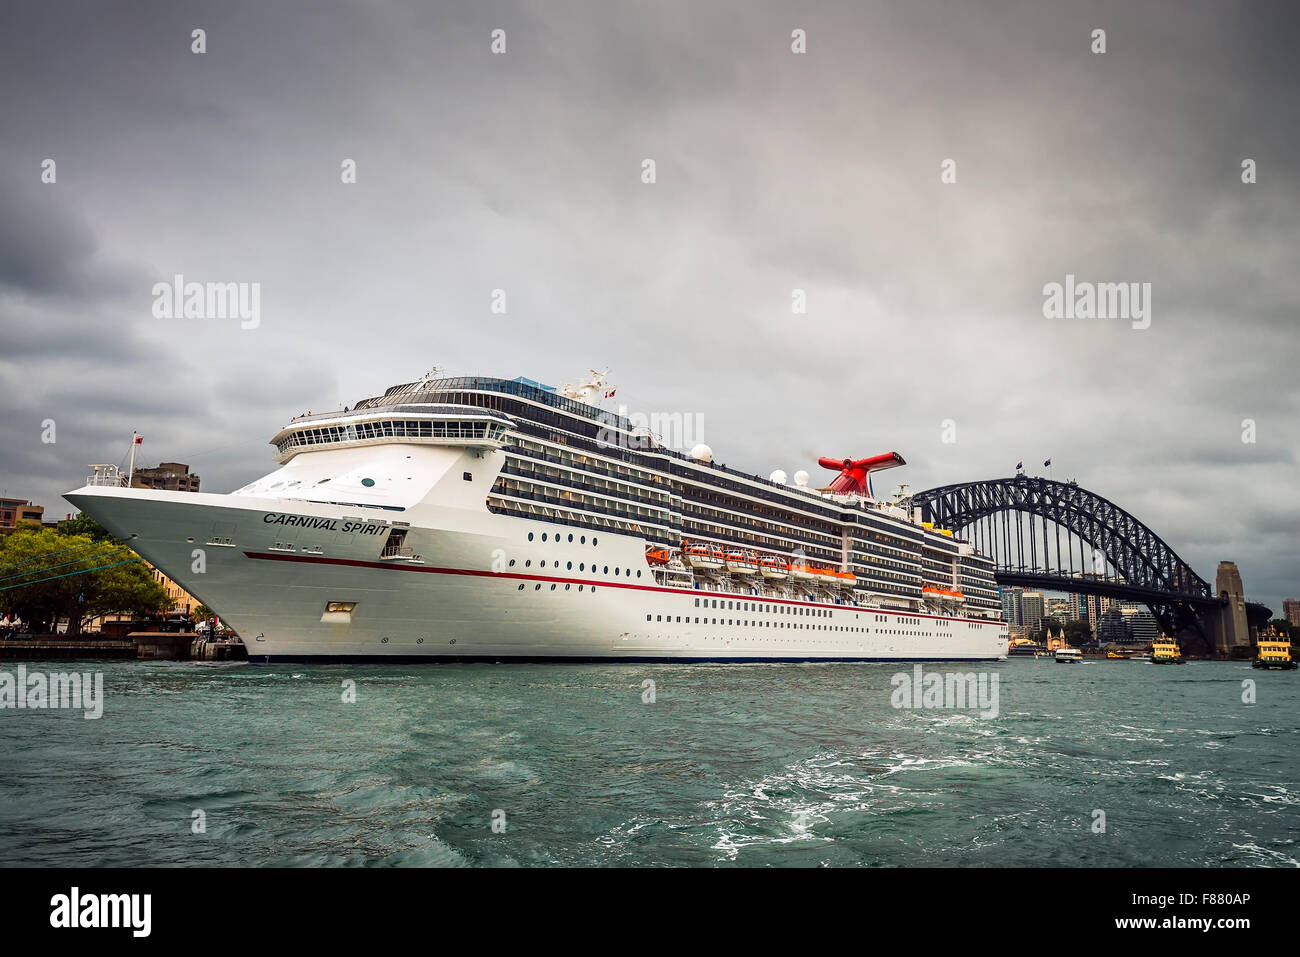 Sydney, Australien - 7. November 2015: Carnival Spirit Cruise Schiff in Sydney Overseas Passenger Terminal Stockfoto